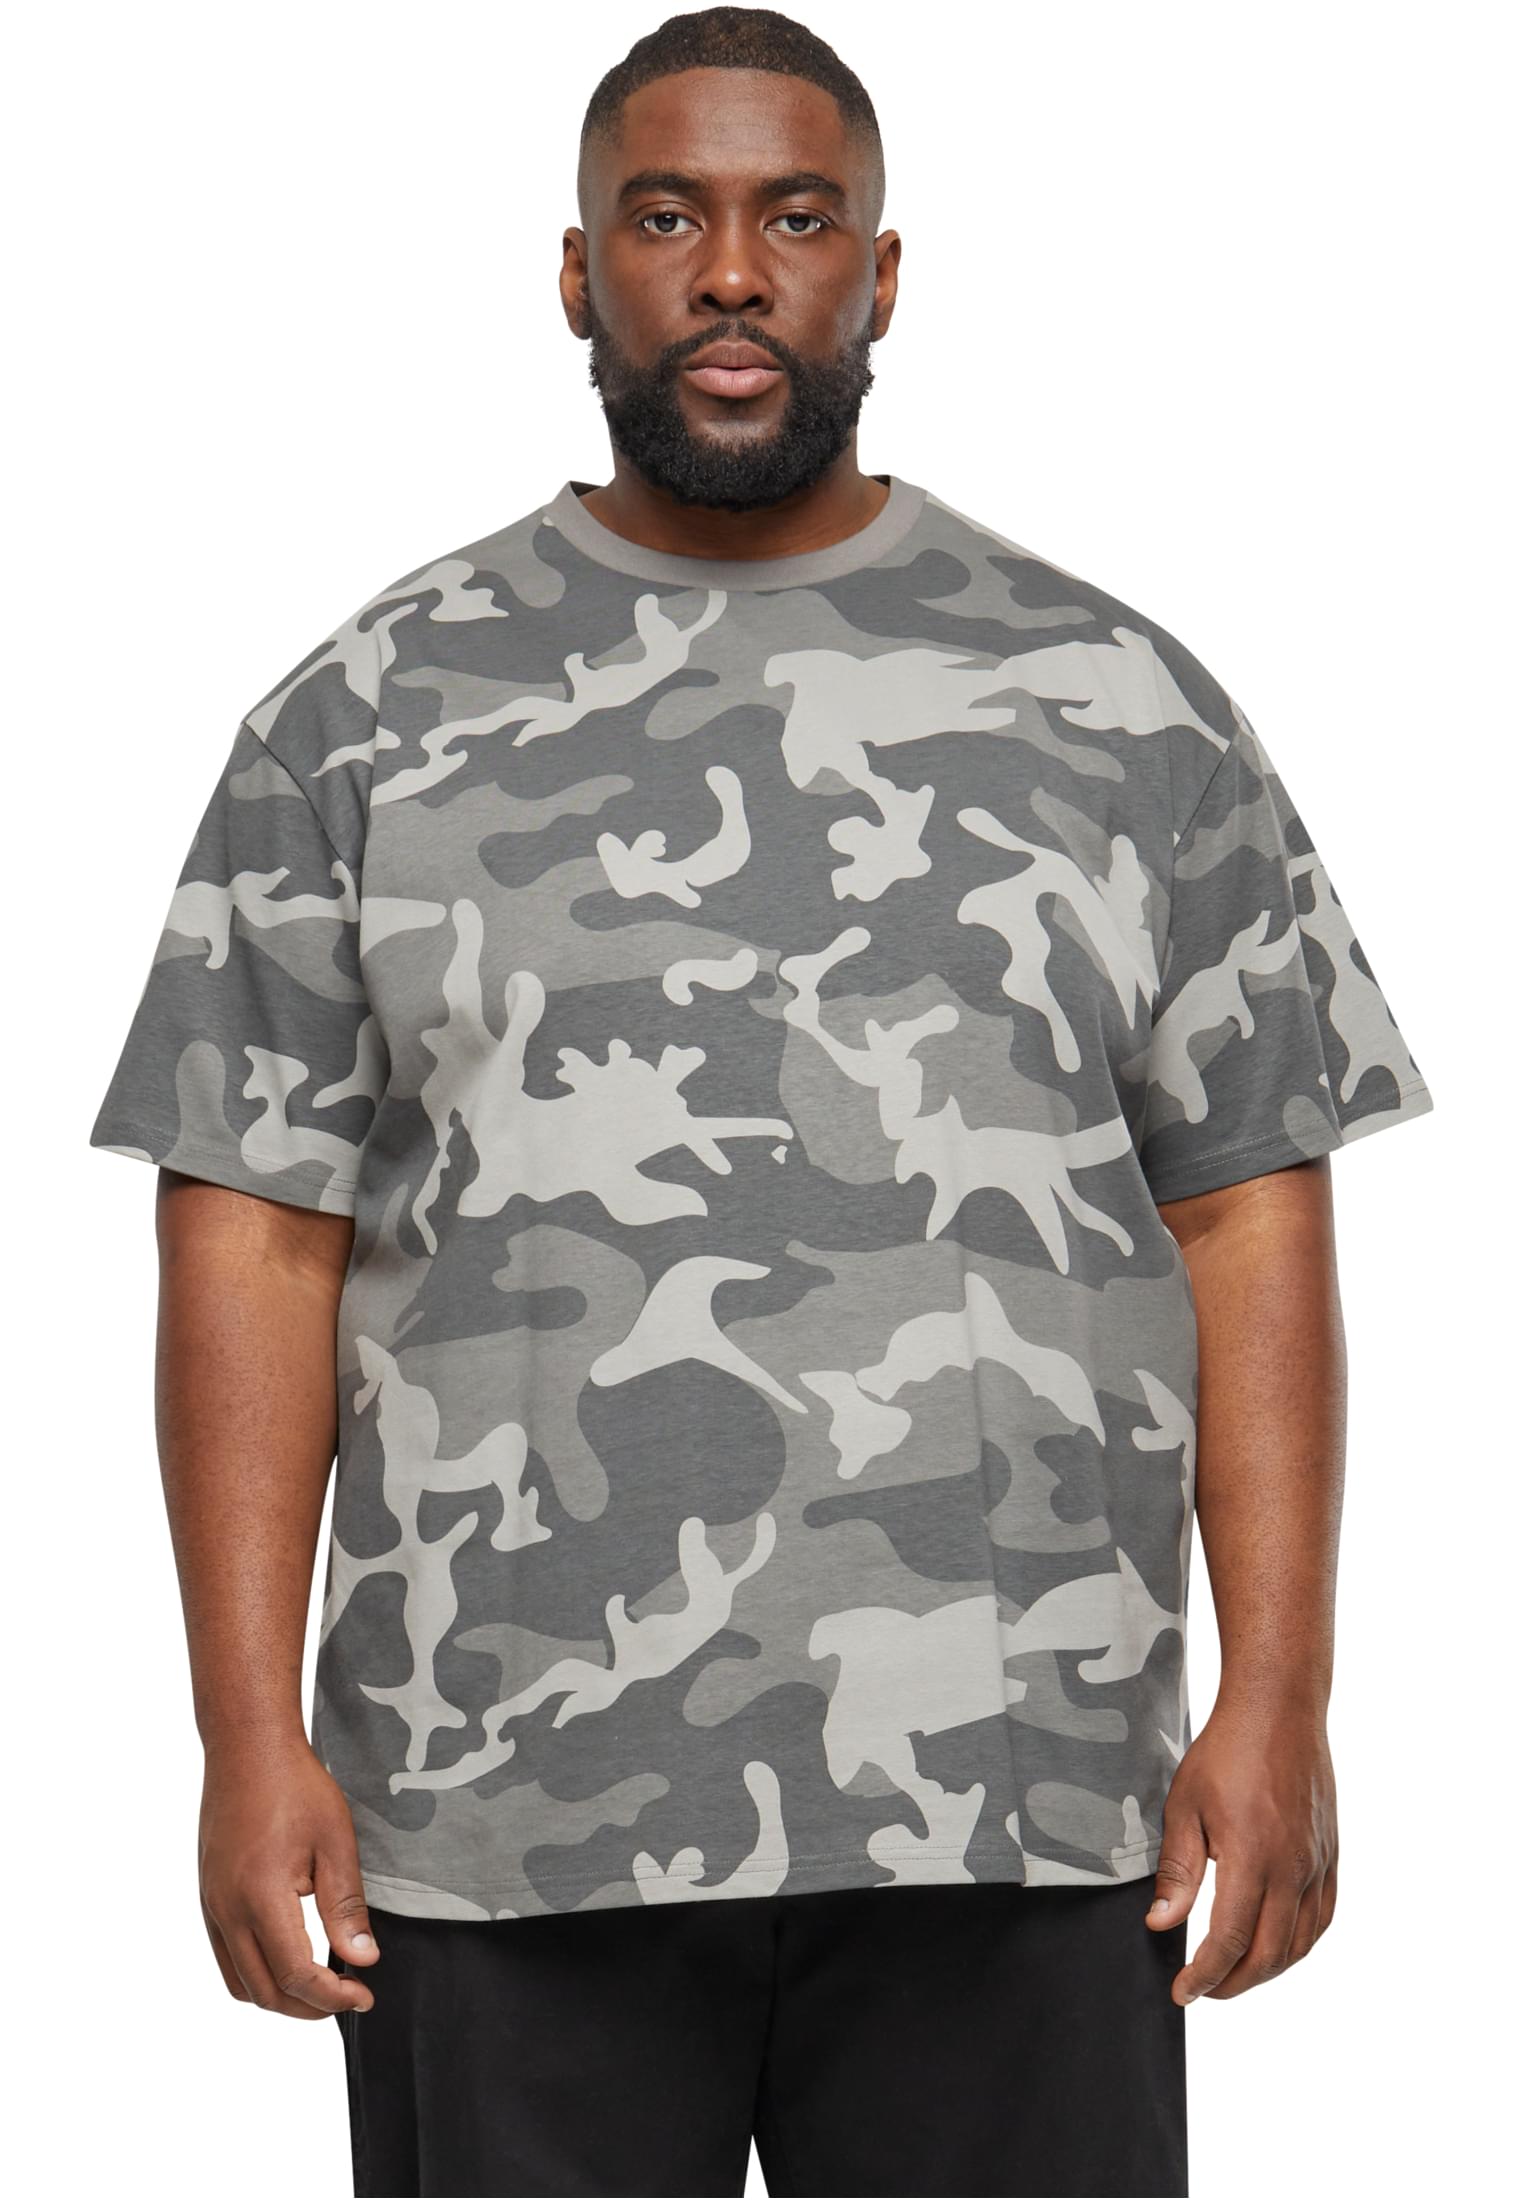 Men's T-shirt Oversized Simple Camo - camouflage